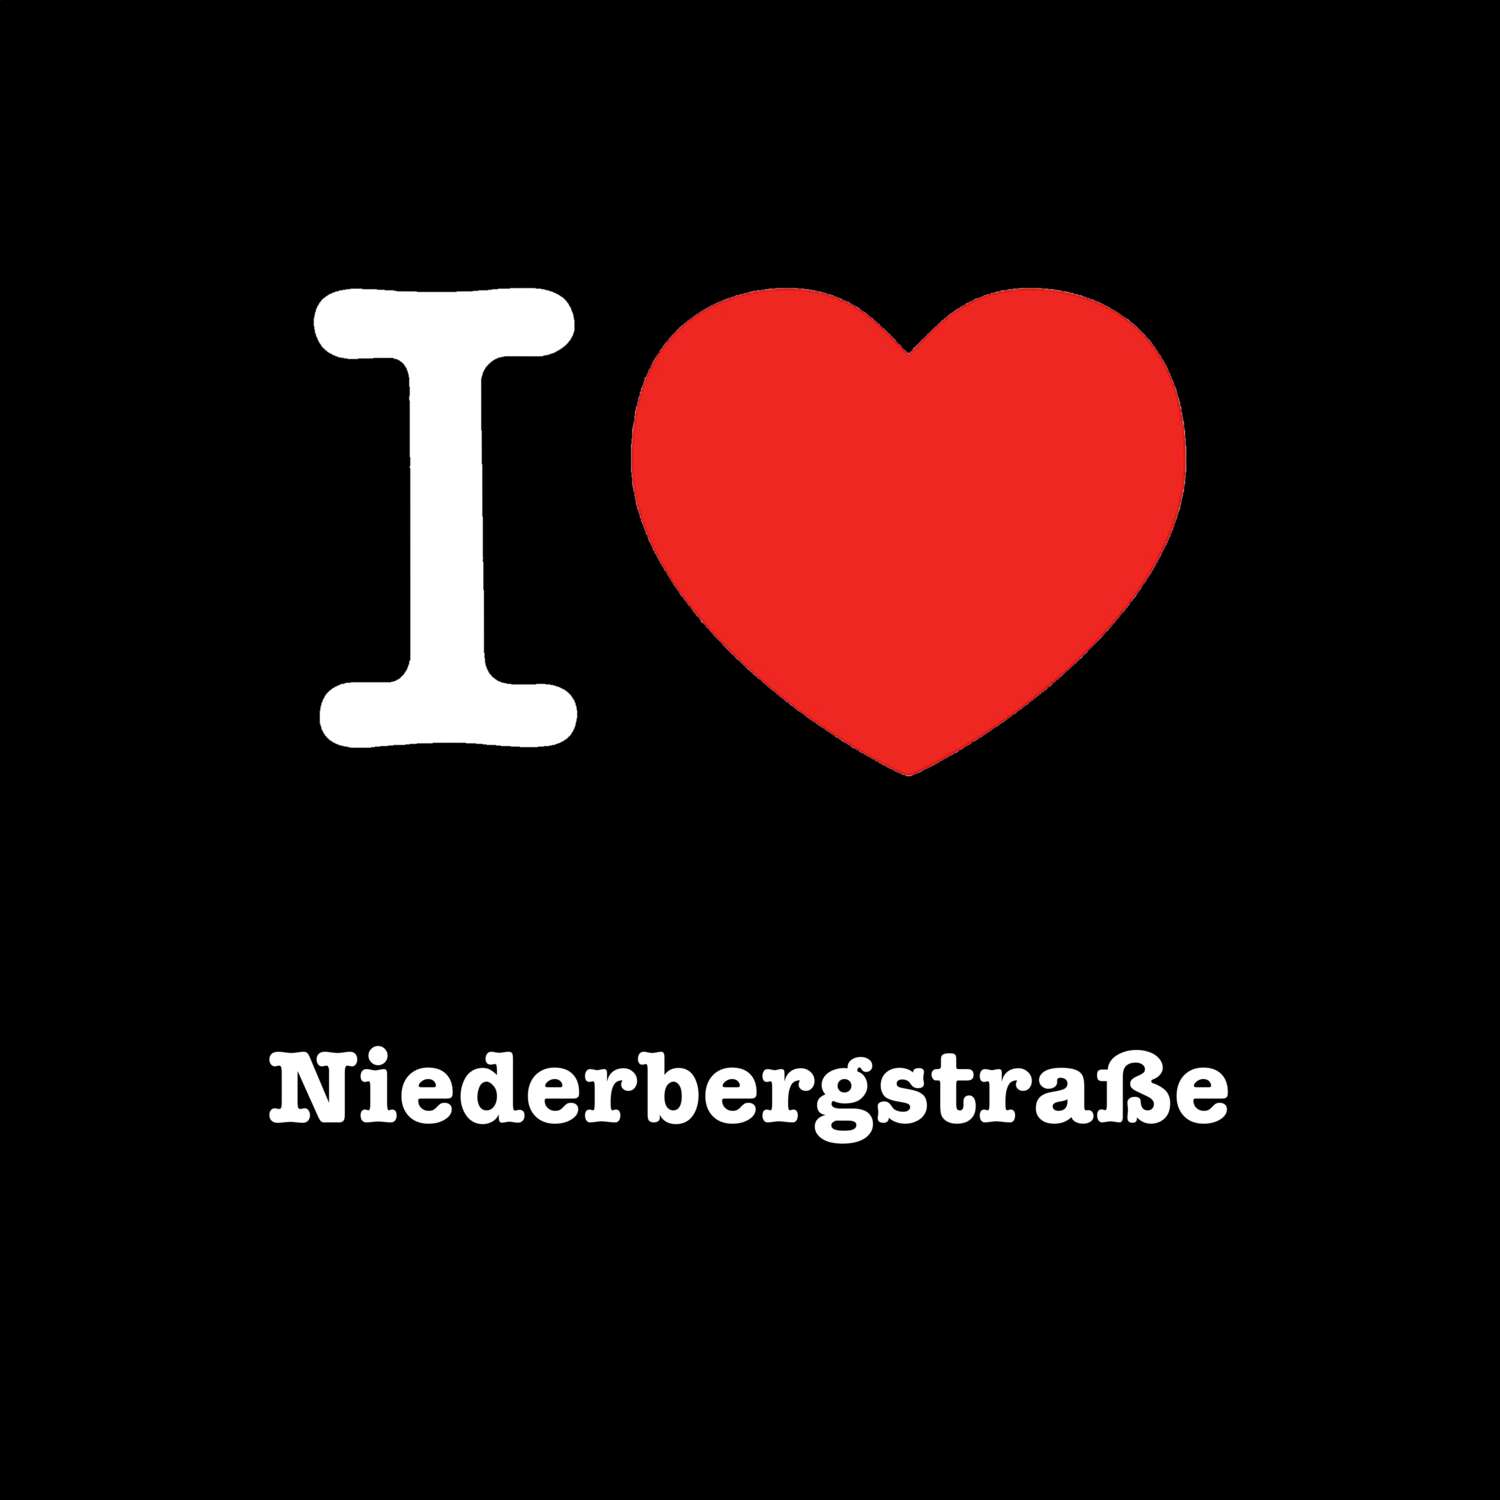 Niederbergstraße T-Shirt »I love«